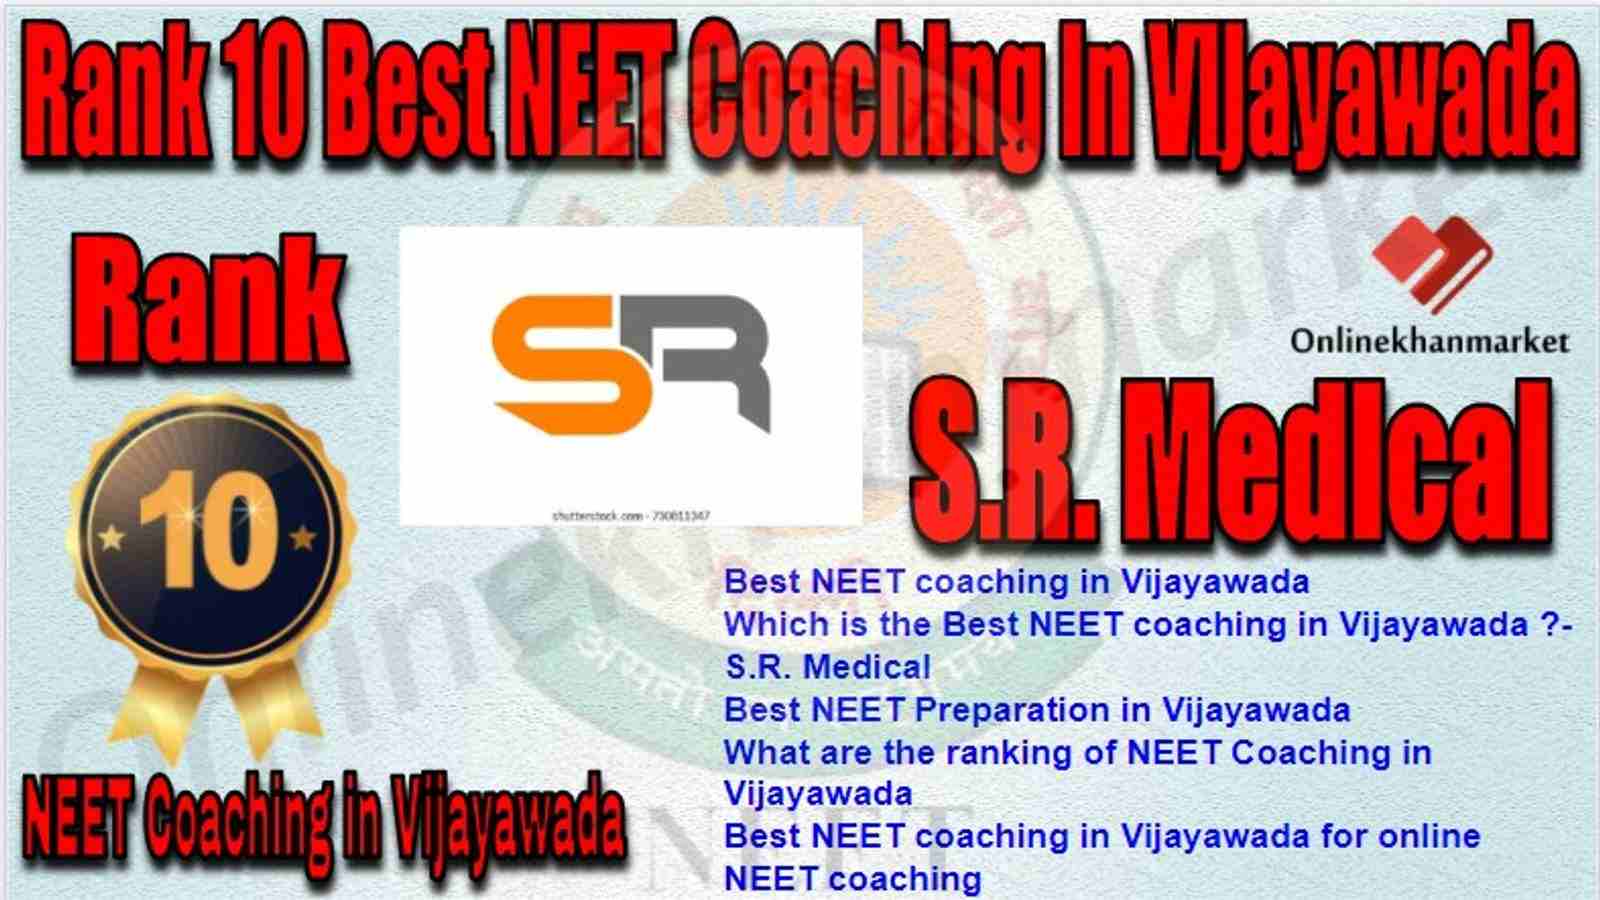 Rank 10 Best NEET Coaching vijayawada